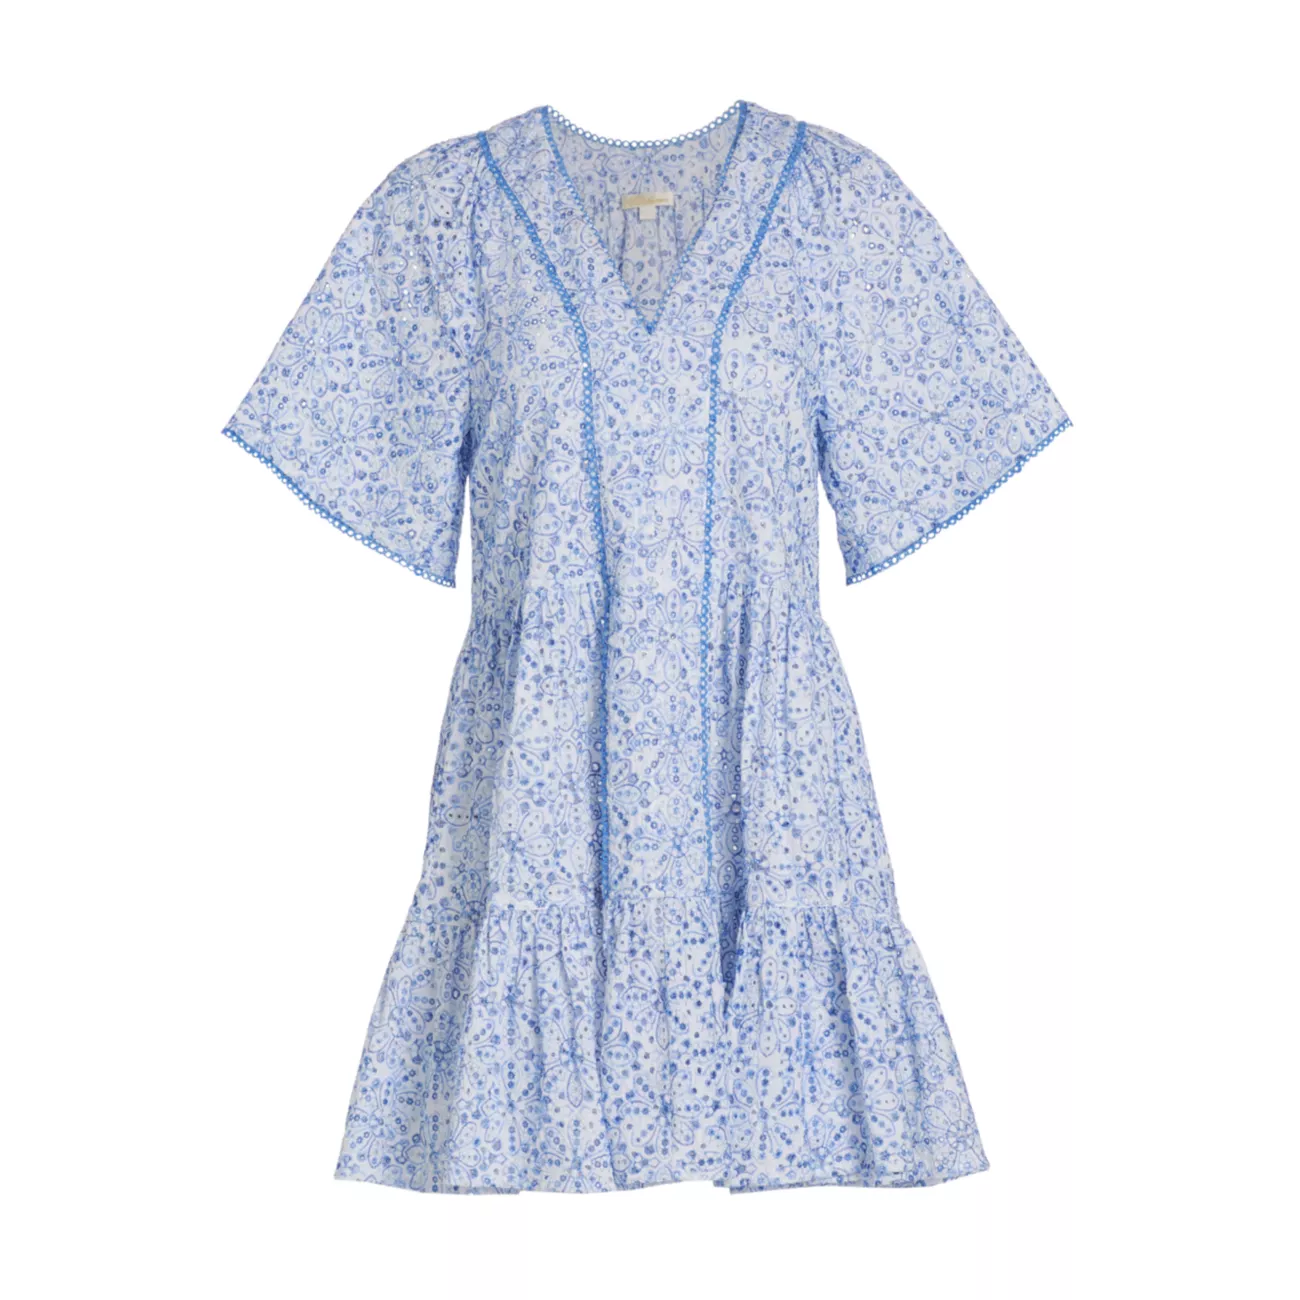 Многоярусное мини-платье Broderie Anglaise с короткими рукавами Shoshanna